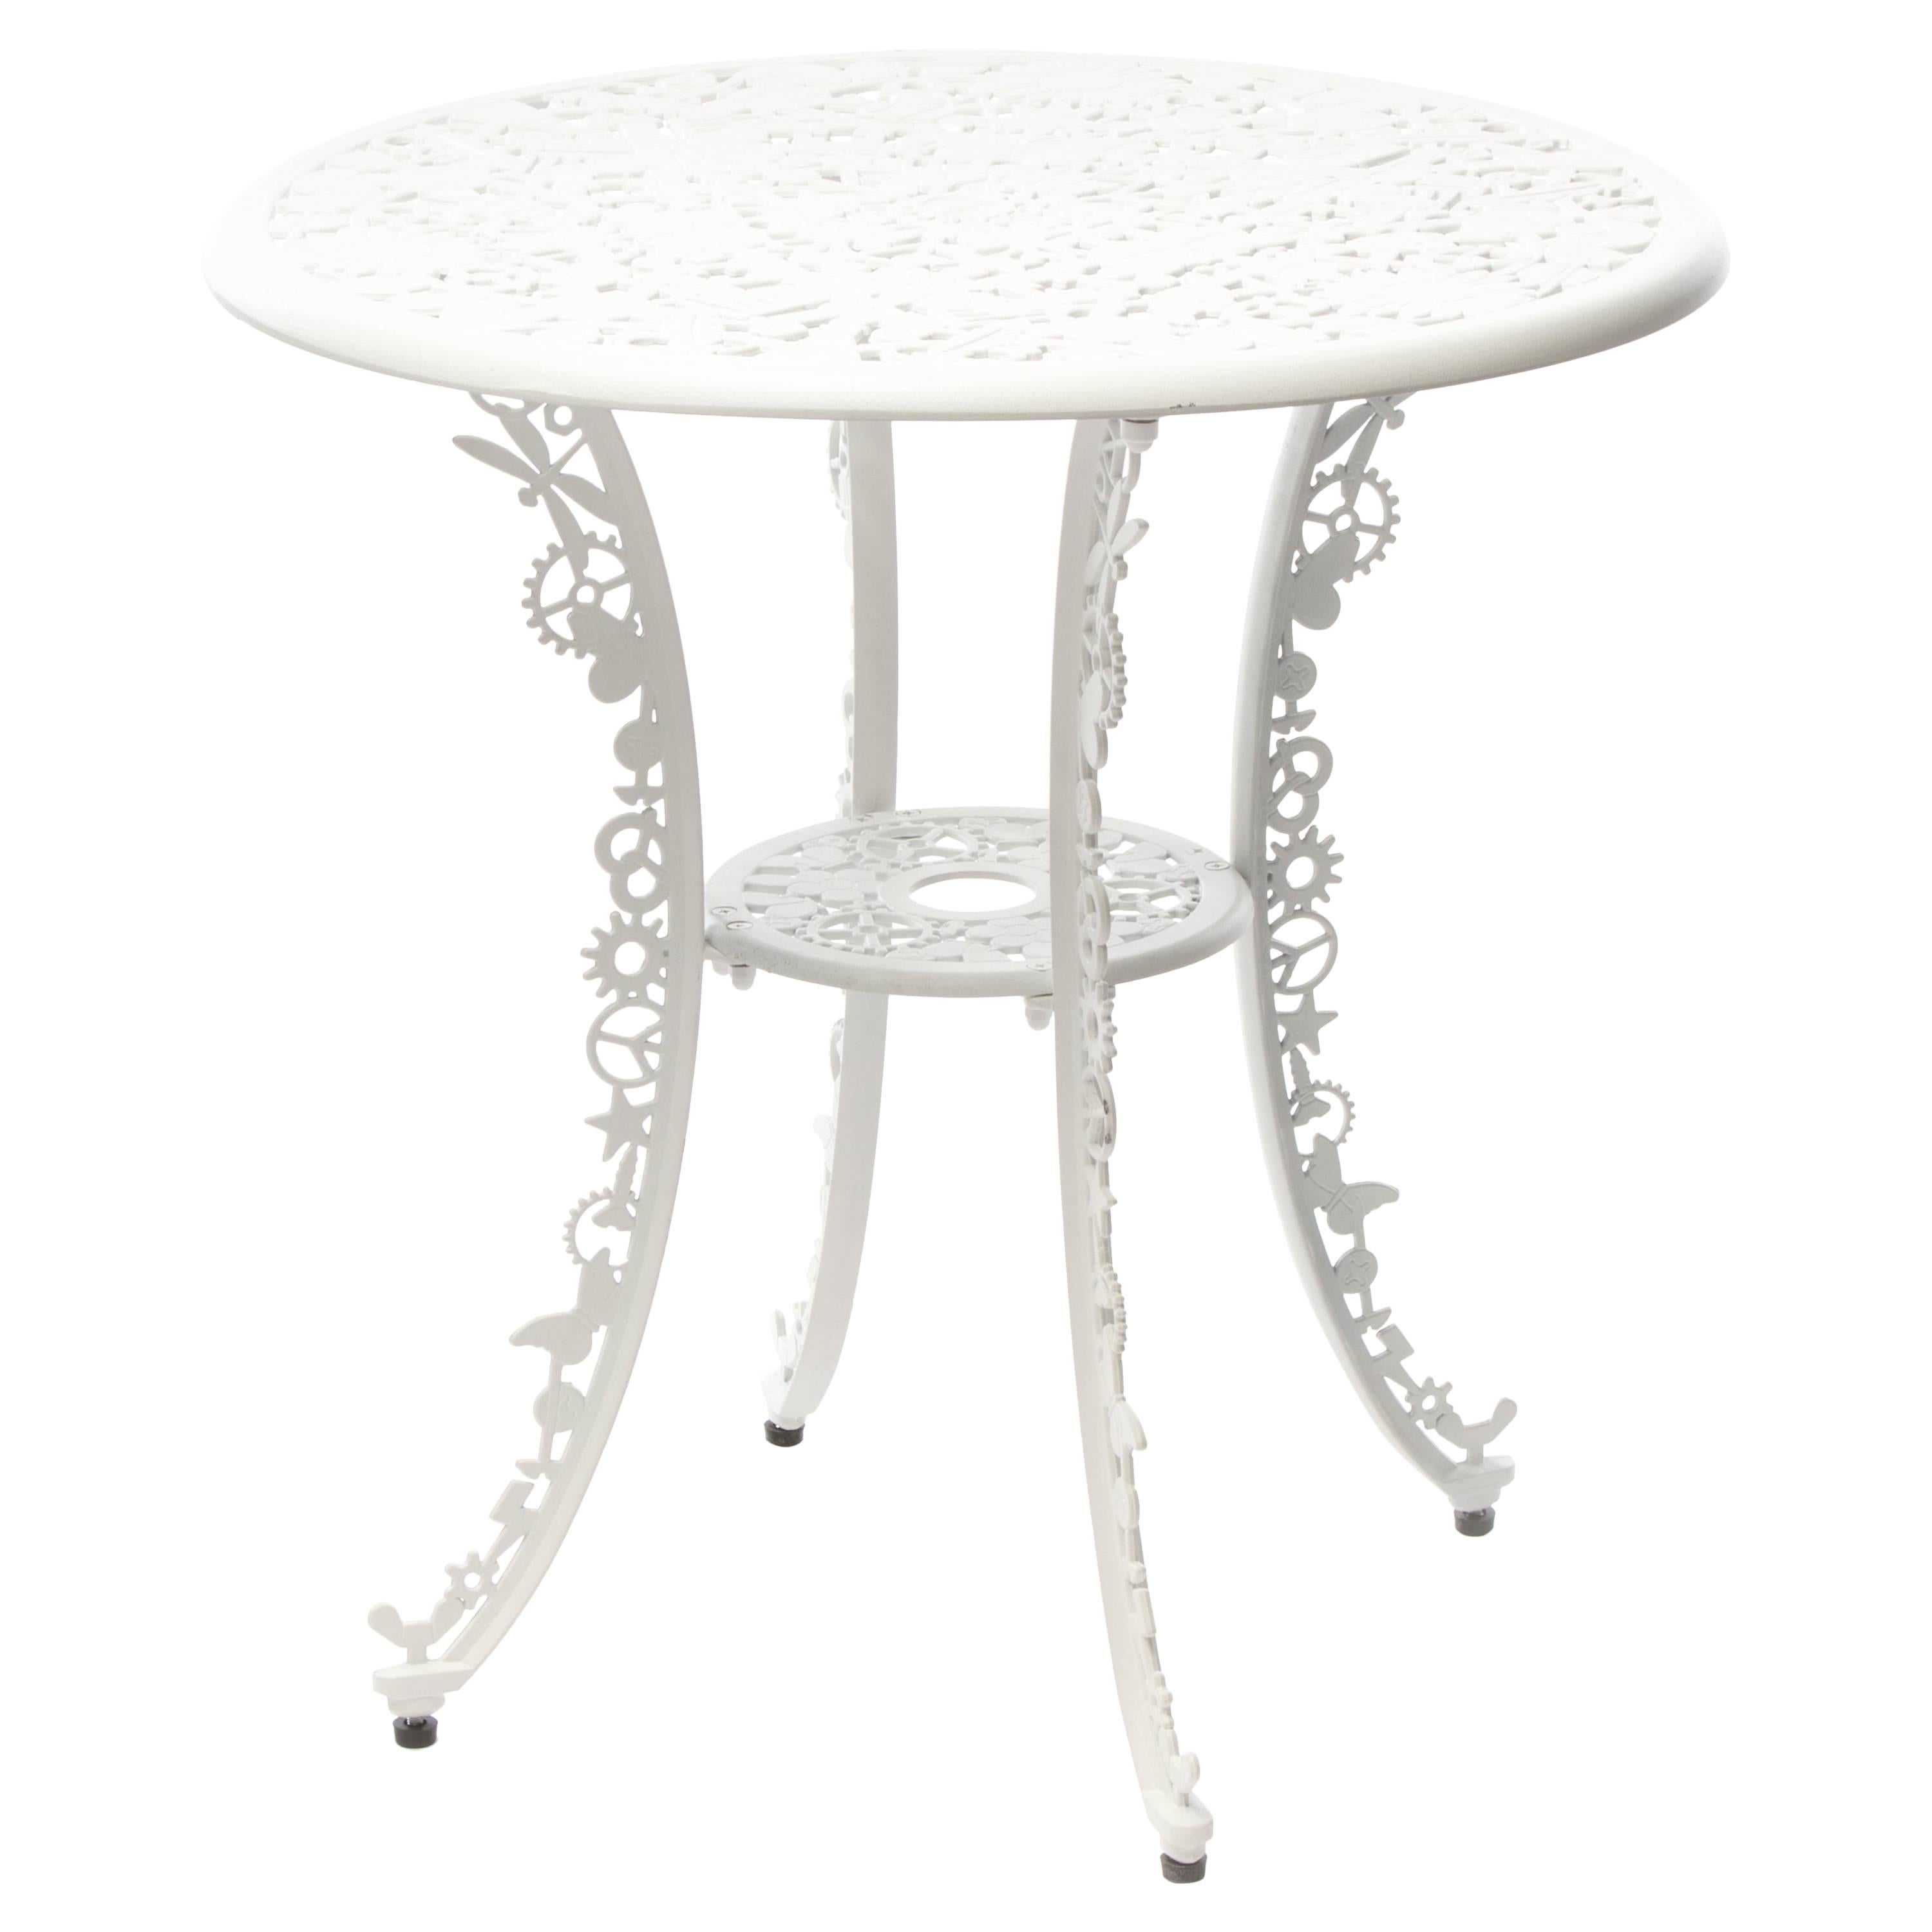 Table en aluminium Industry Garden Furniture de Seletti, blanche